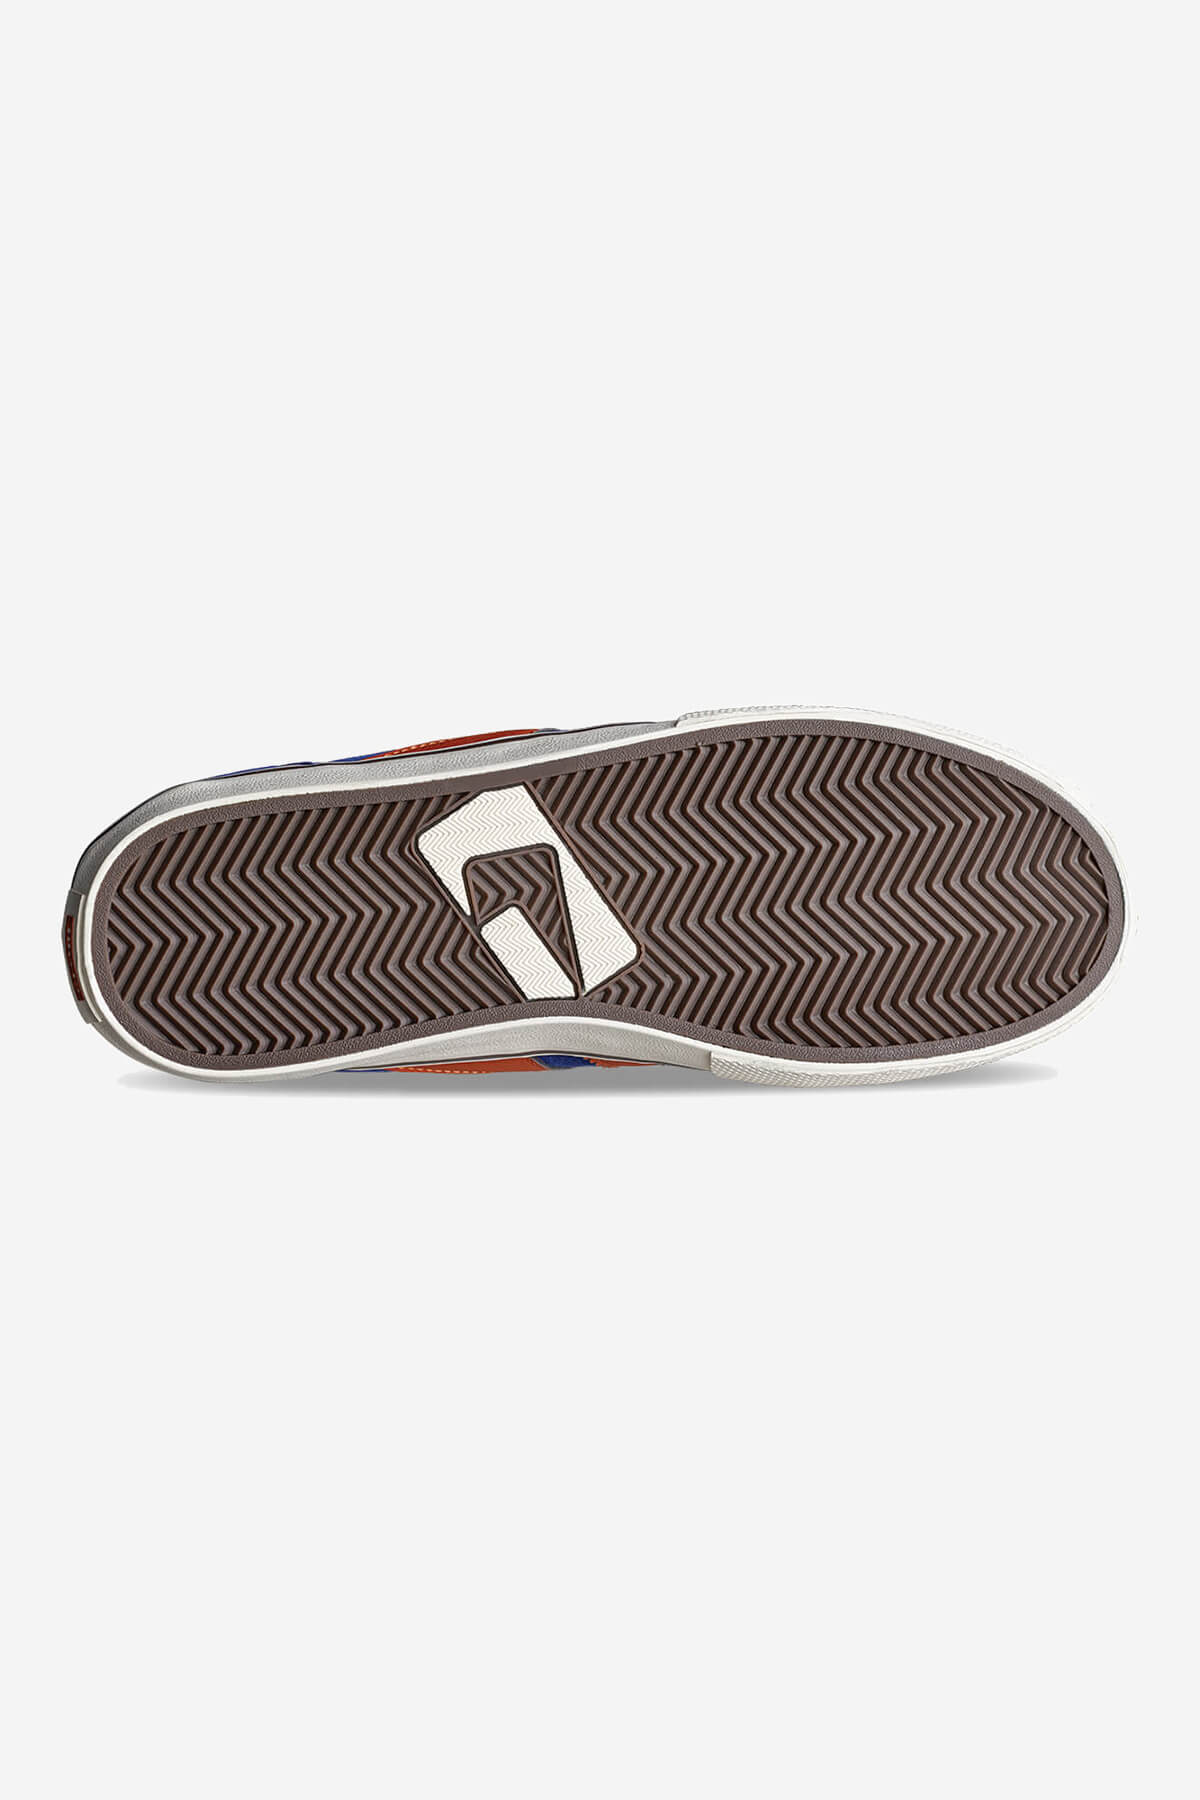 Encore-2 Navy/Brown/Antique skate shoes